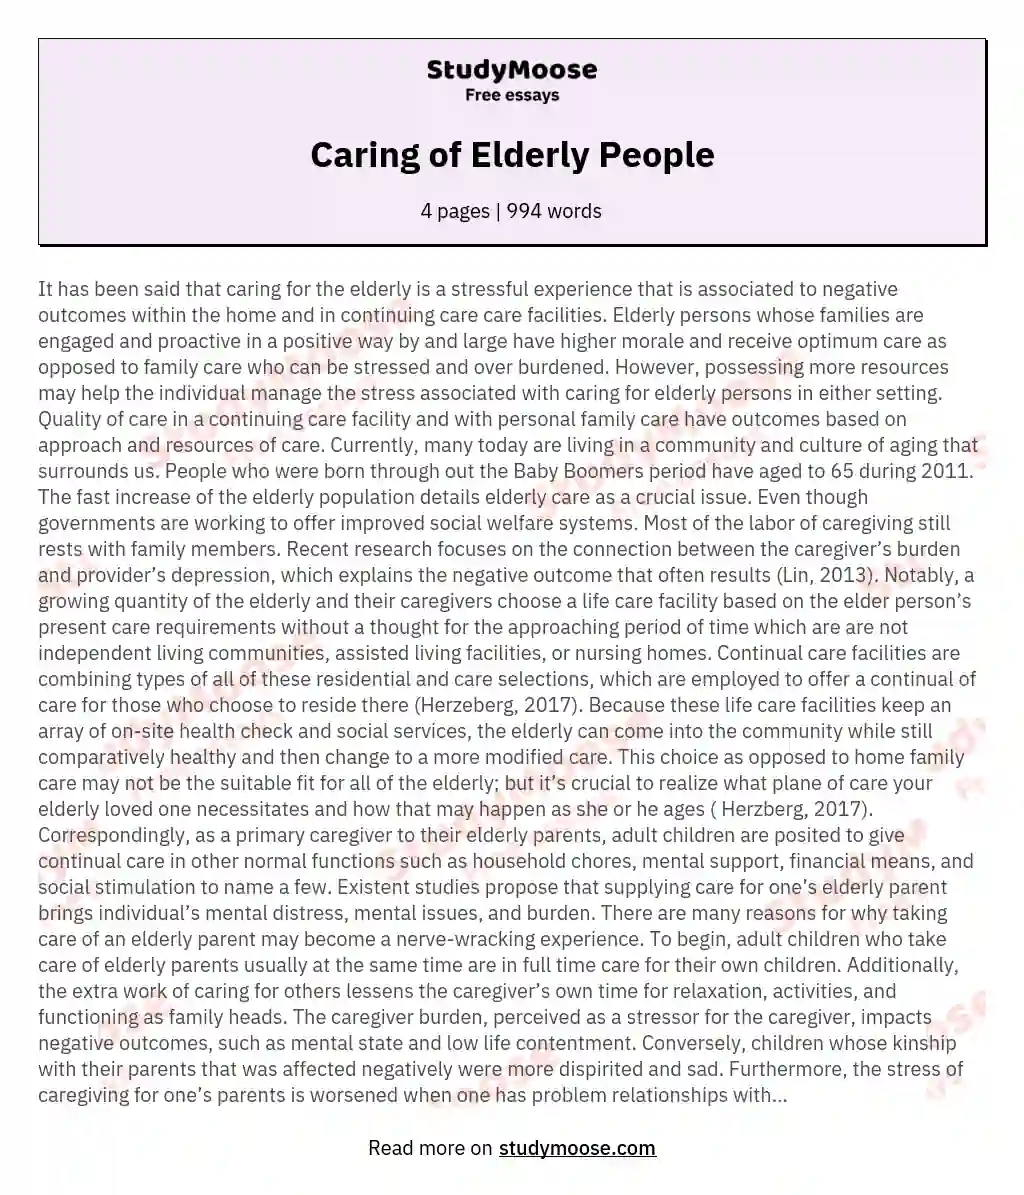 Caring of Elderly People